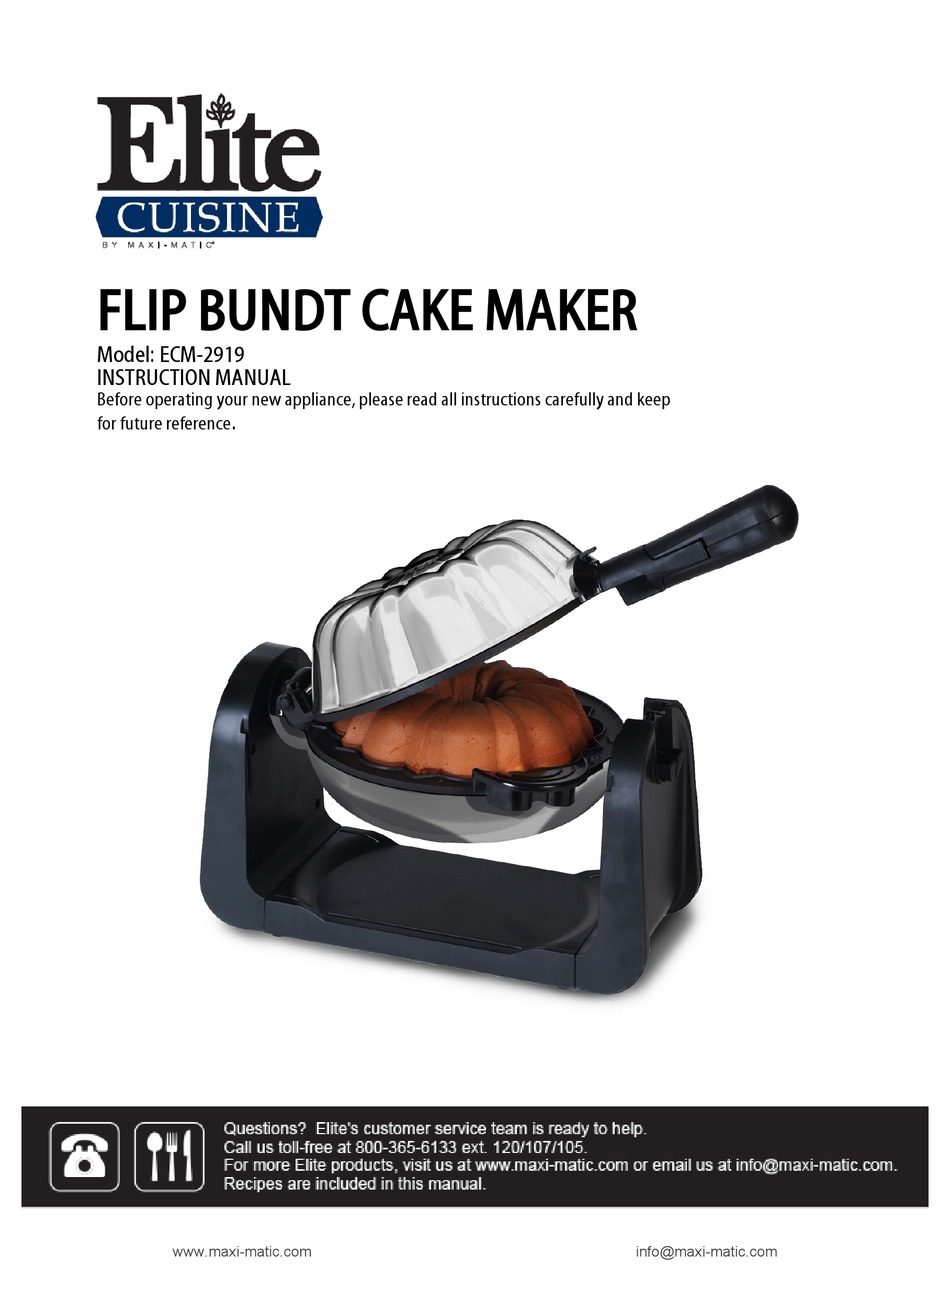  Maxi-Matic Elite Cuisine ECM-2919 Flip Bundt Cake